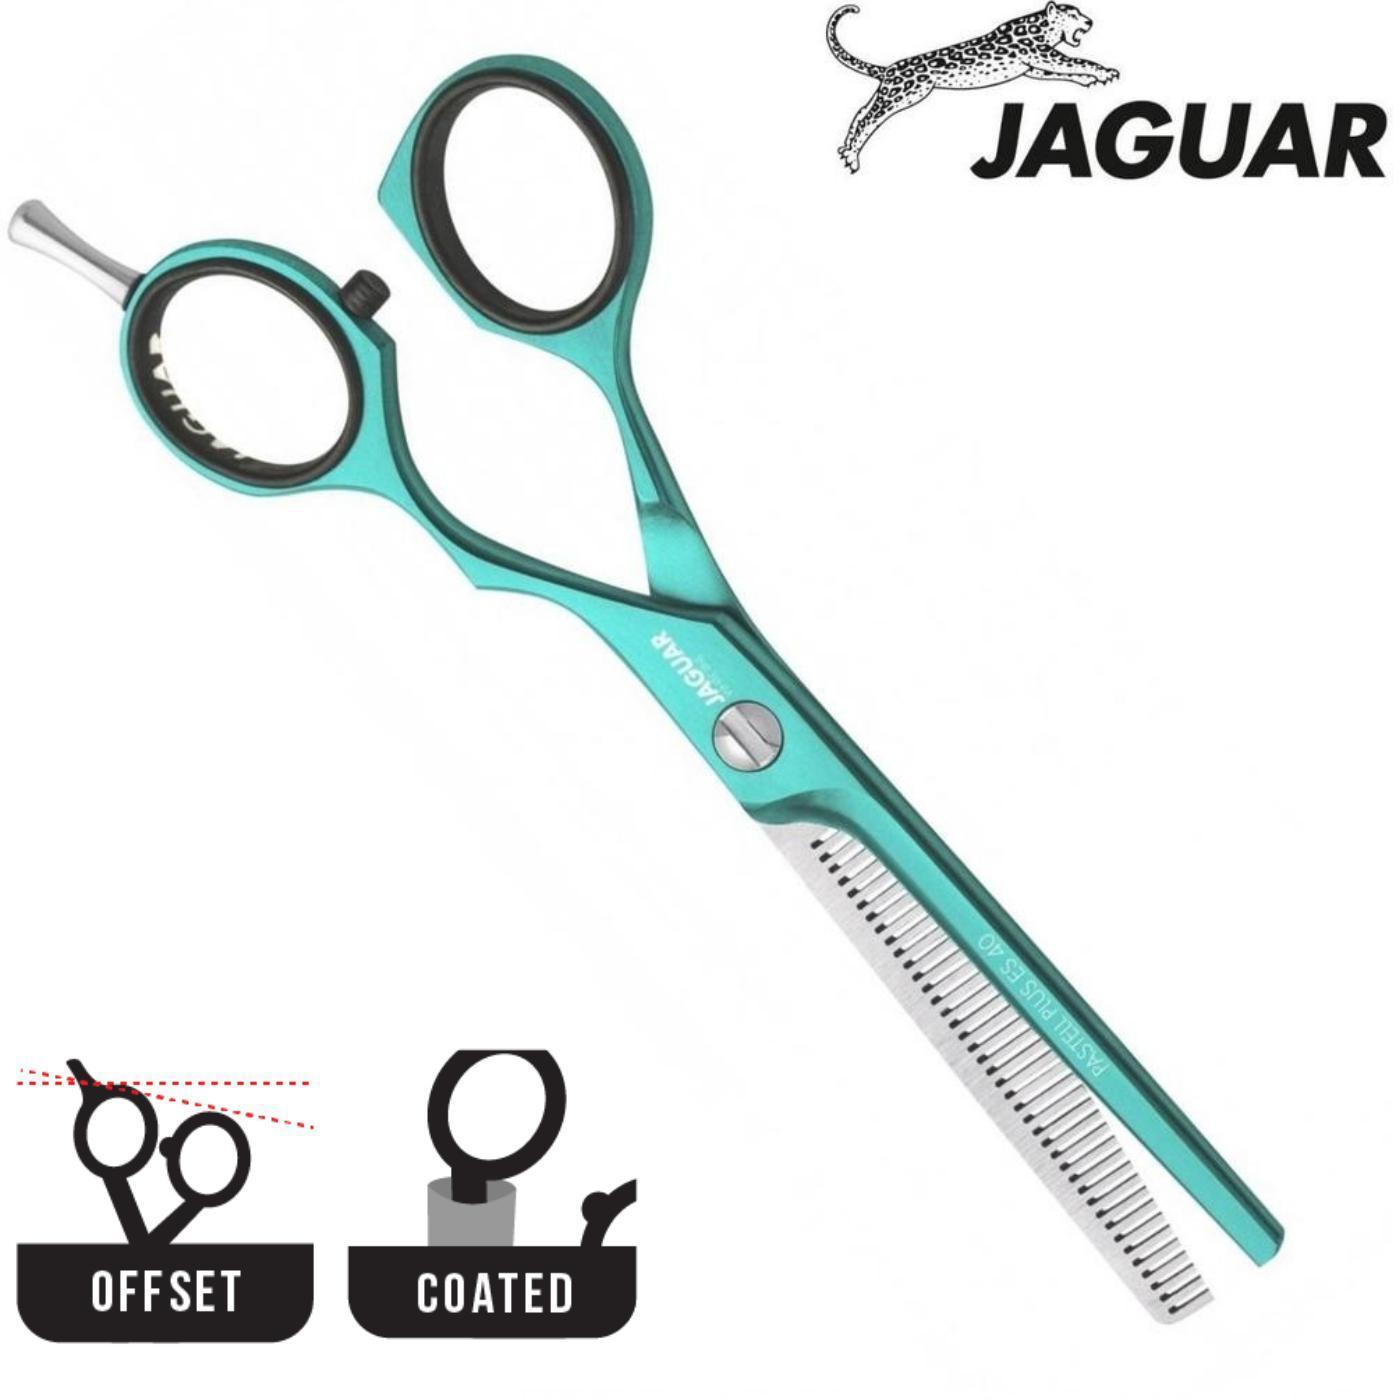 Jaguar Pastell Plus ES40 Mint Thinning Scissors - Japan Scissors